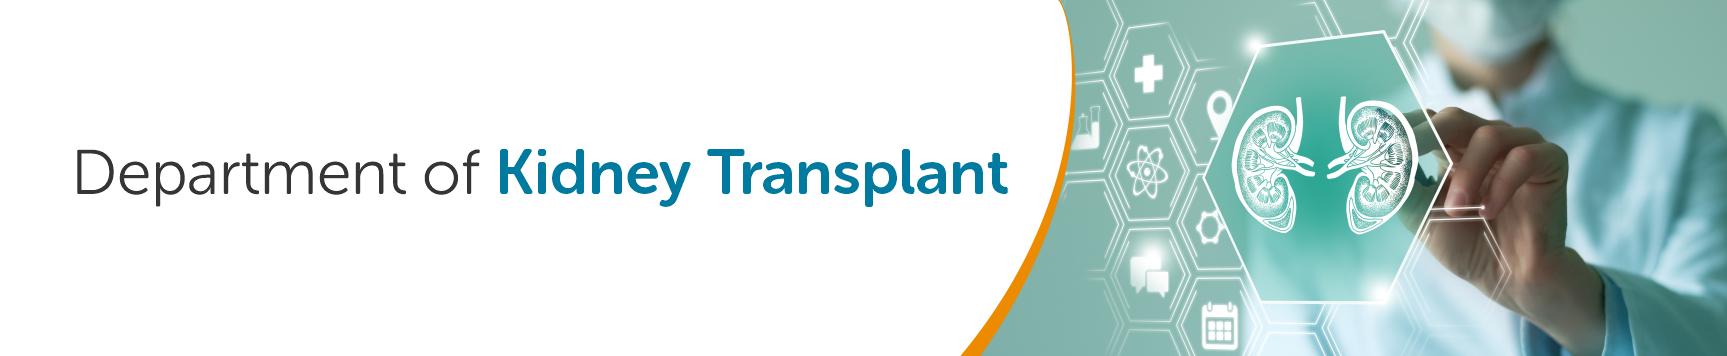 Kidney Transplant - Web Banner - W 1728 x H 356 - 170224